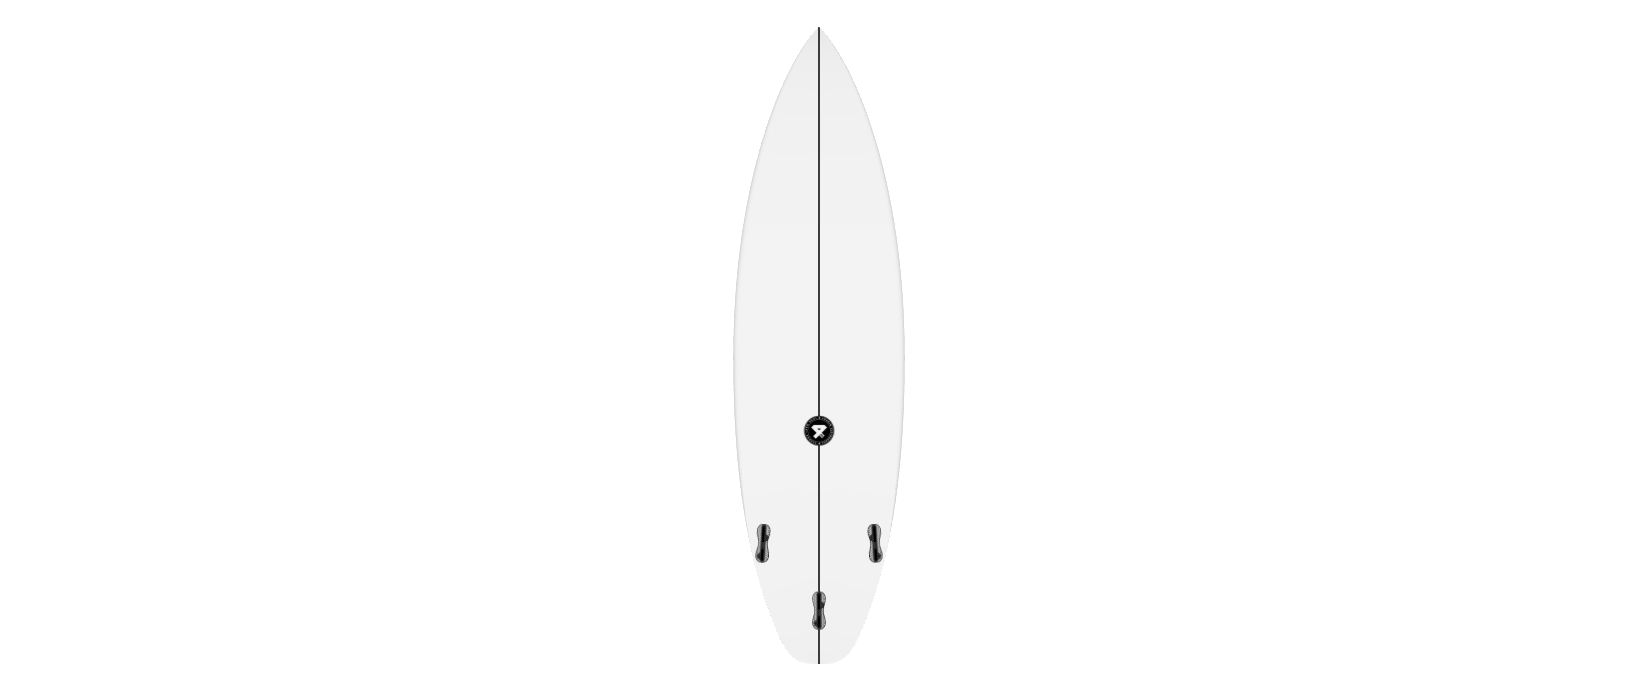 Fourth Freshblade DS Surfboard - back